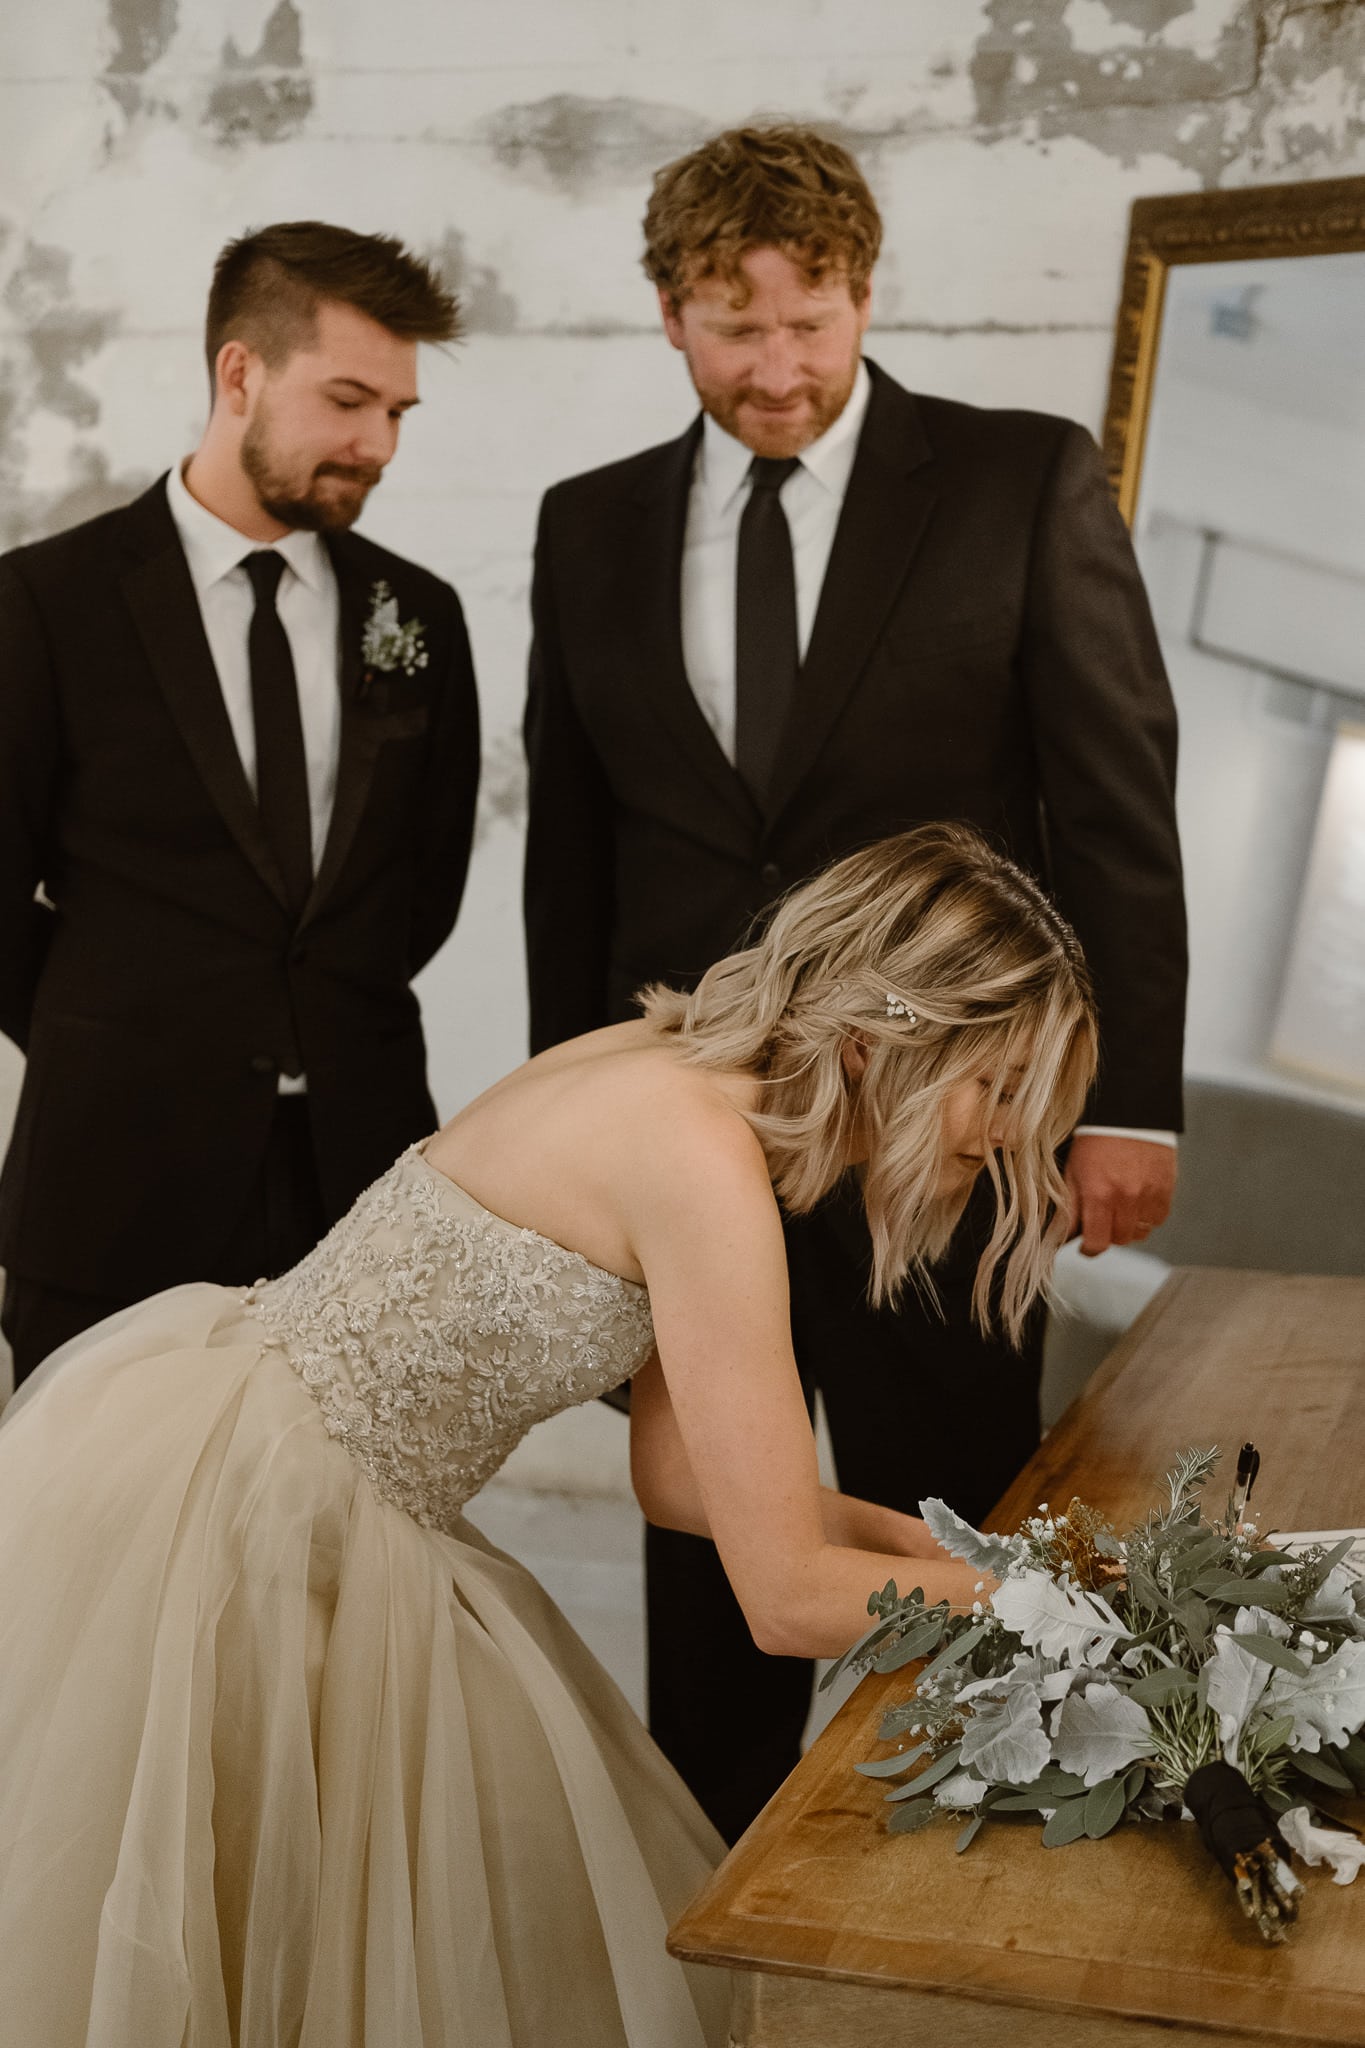 St Vrain Wedding Photographer | Longmont Wedding Photographer | Colorado Winter Wedding Photographer, Colorado industrial chic wedding ceremony, bride and groom signing marriage license